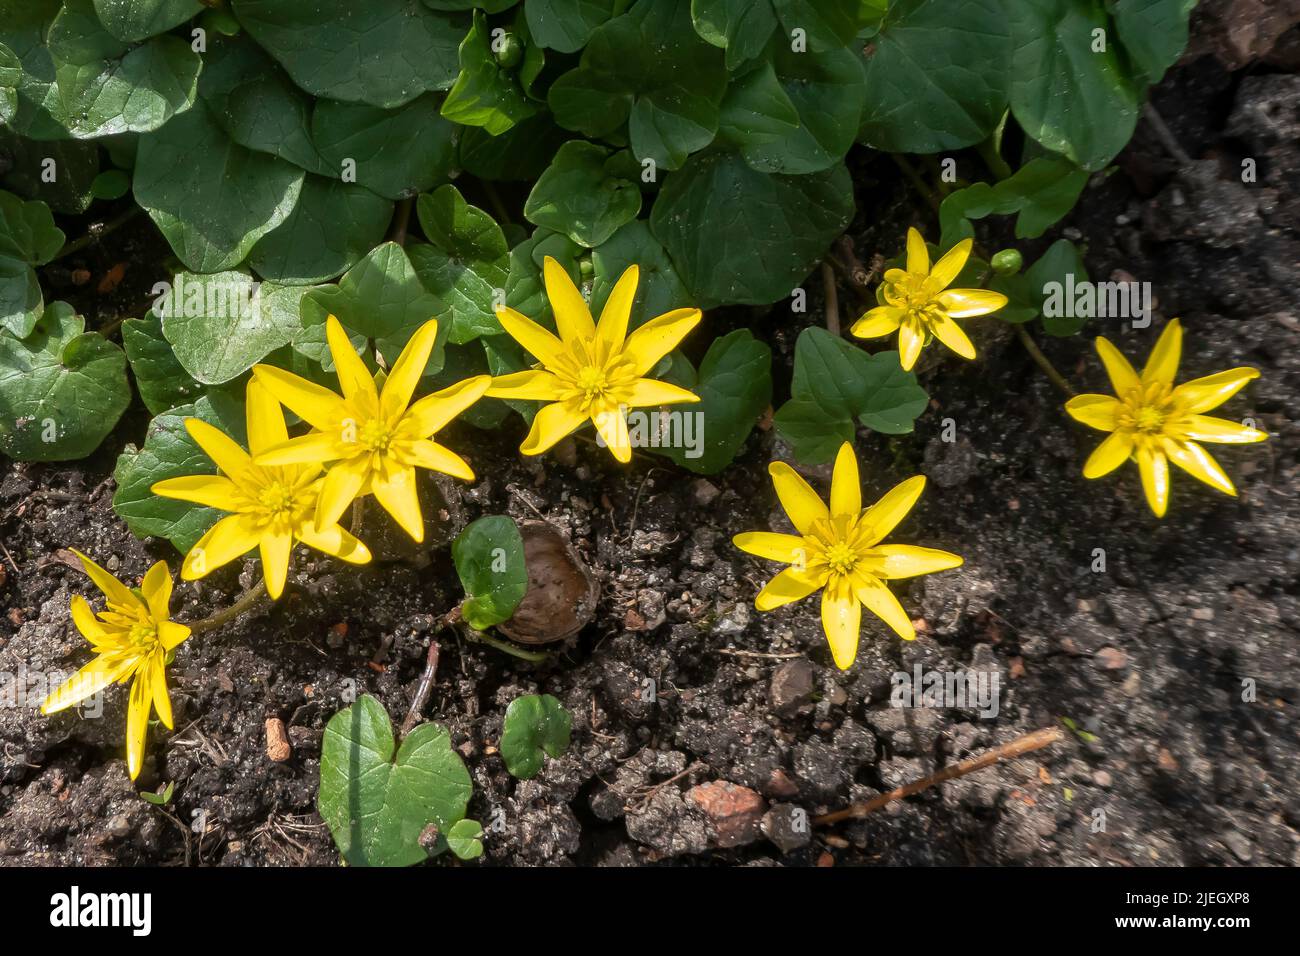 Blühendes Scharbockskraut; Ficaria verna / flowering Pilewort; Ranunculus ficaria Stock Photo